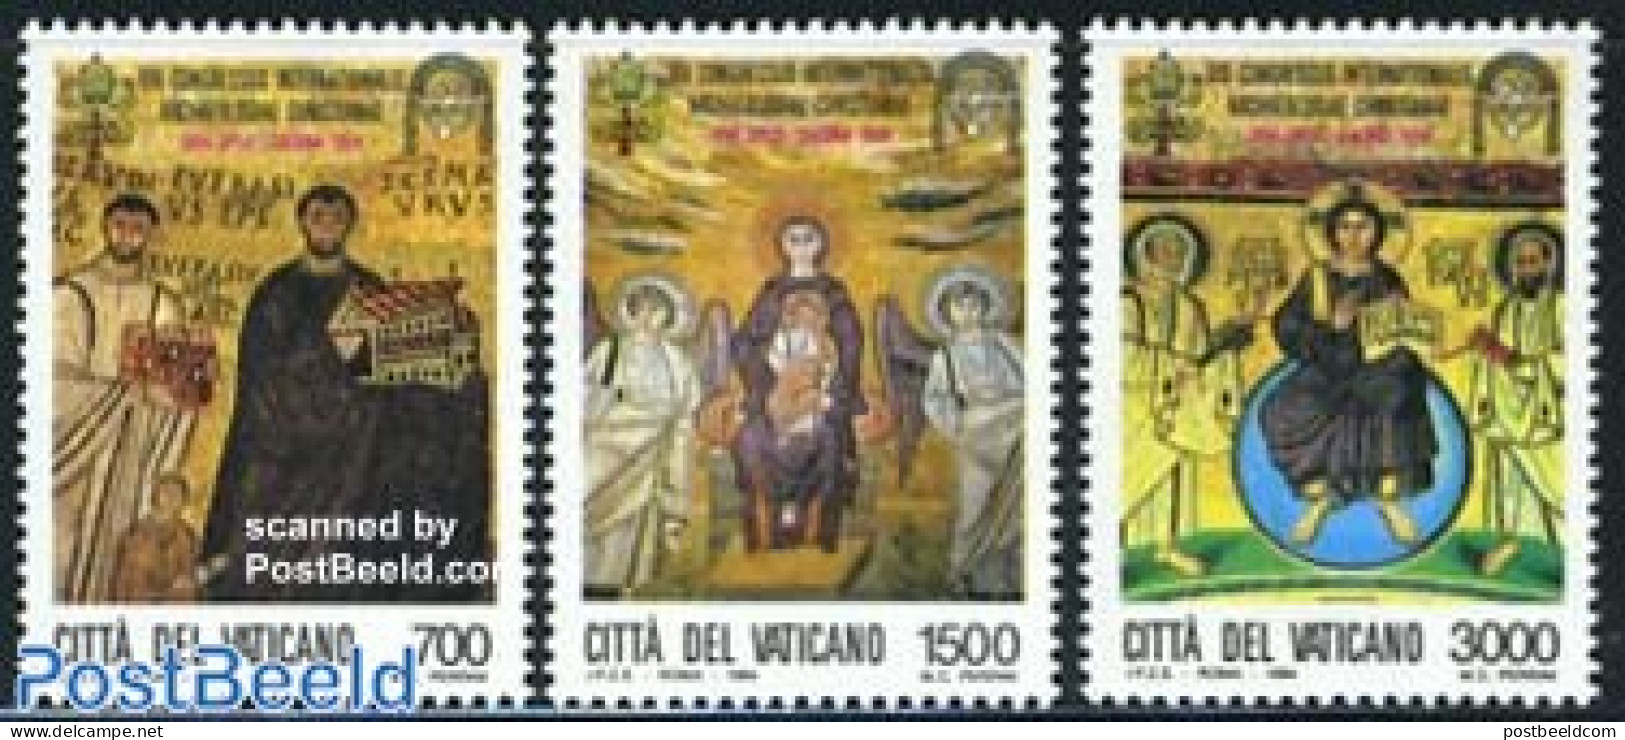 Vatican 1994 Archaeology Congress 3v, Mint NH, Religion - Religion - Ongebruikt